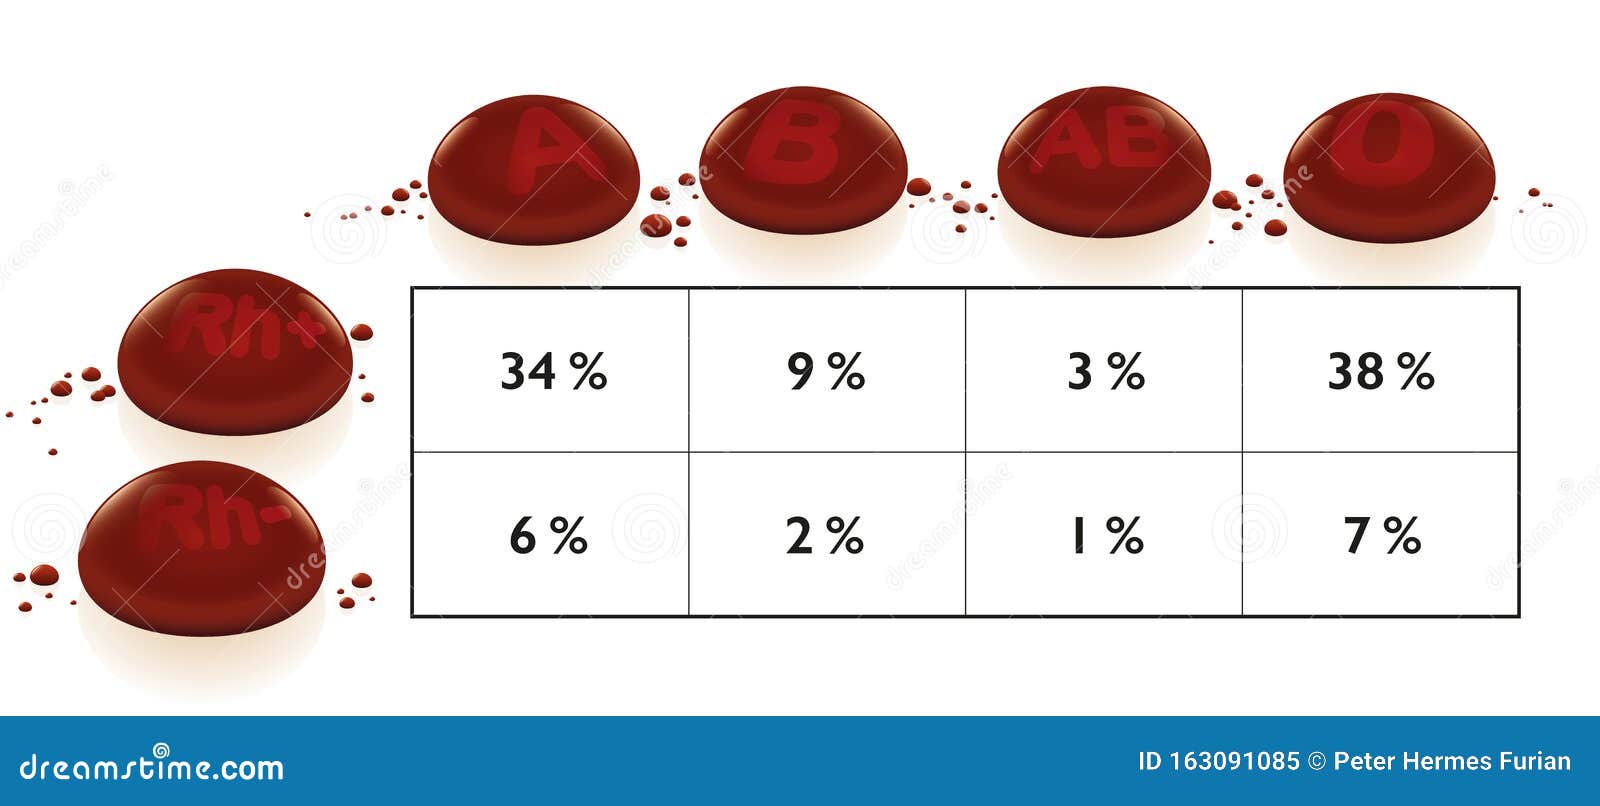 O+ Blood Type / Group Rh (Rhesus) Positive | Sticker